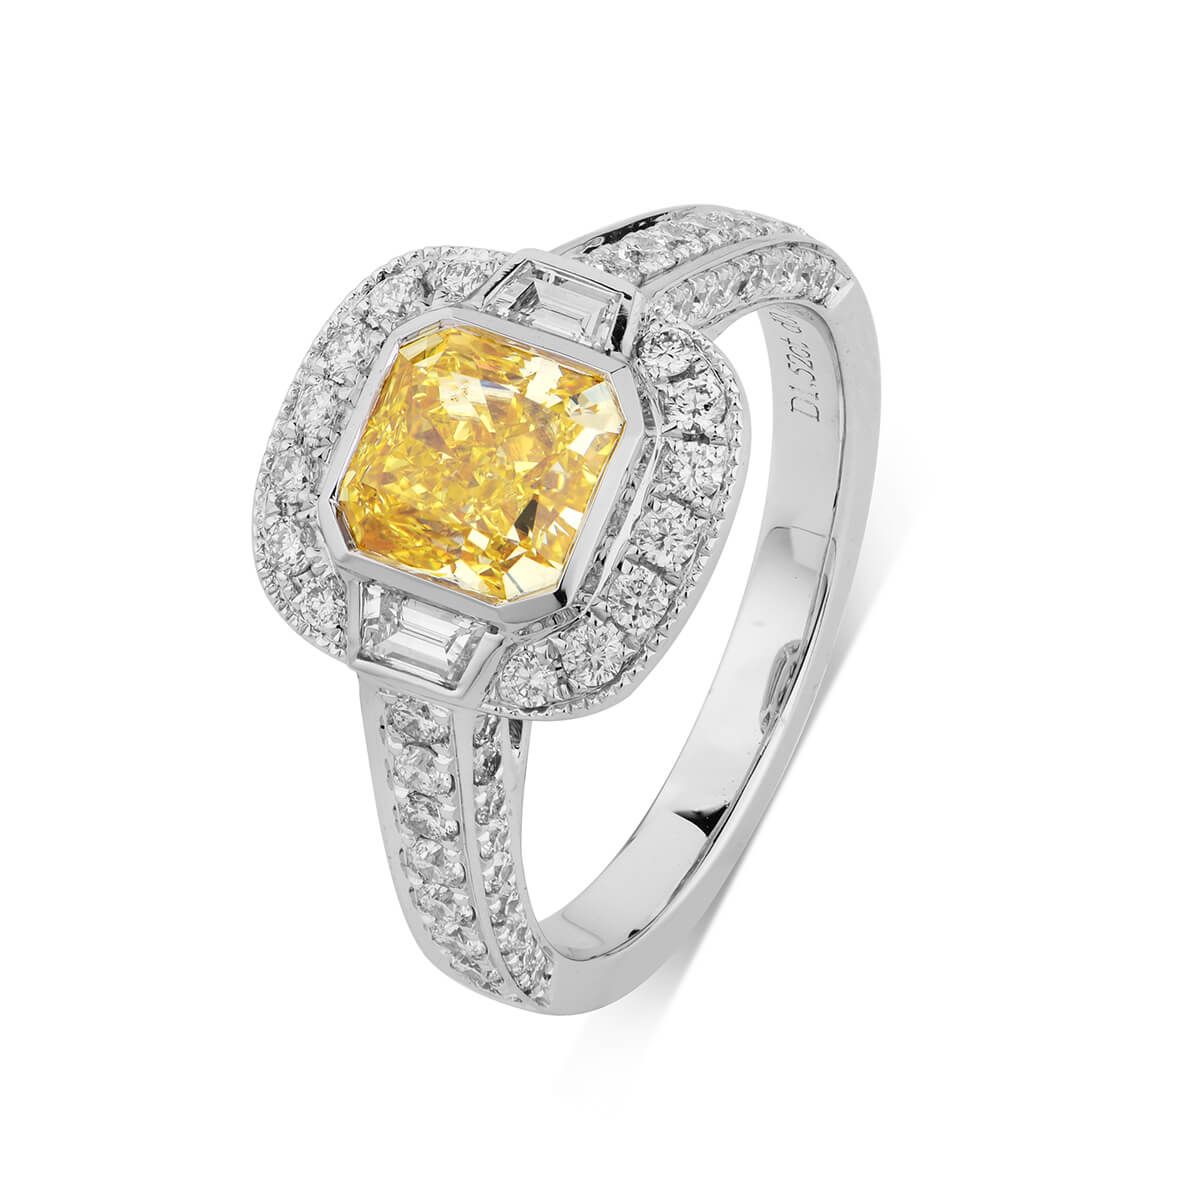 Fancy Intense Yellow Diamond Ring, 1.52 Ct. (2.28 Ct. TW), Radiant shape, GIA Certified, 6173249805